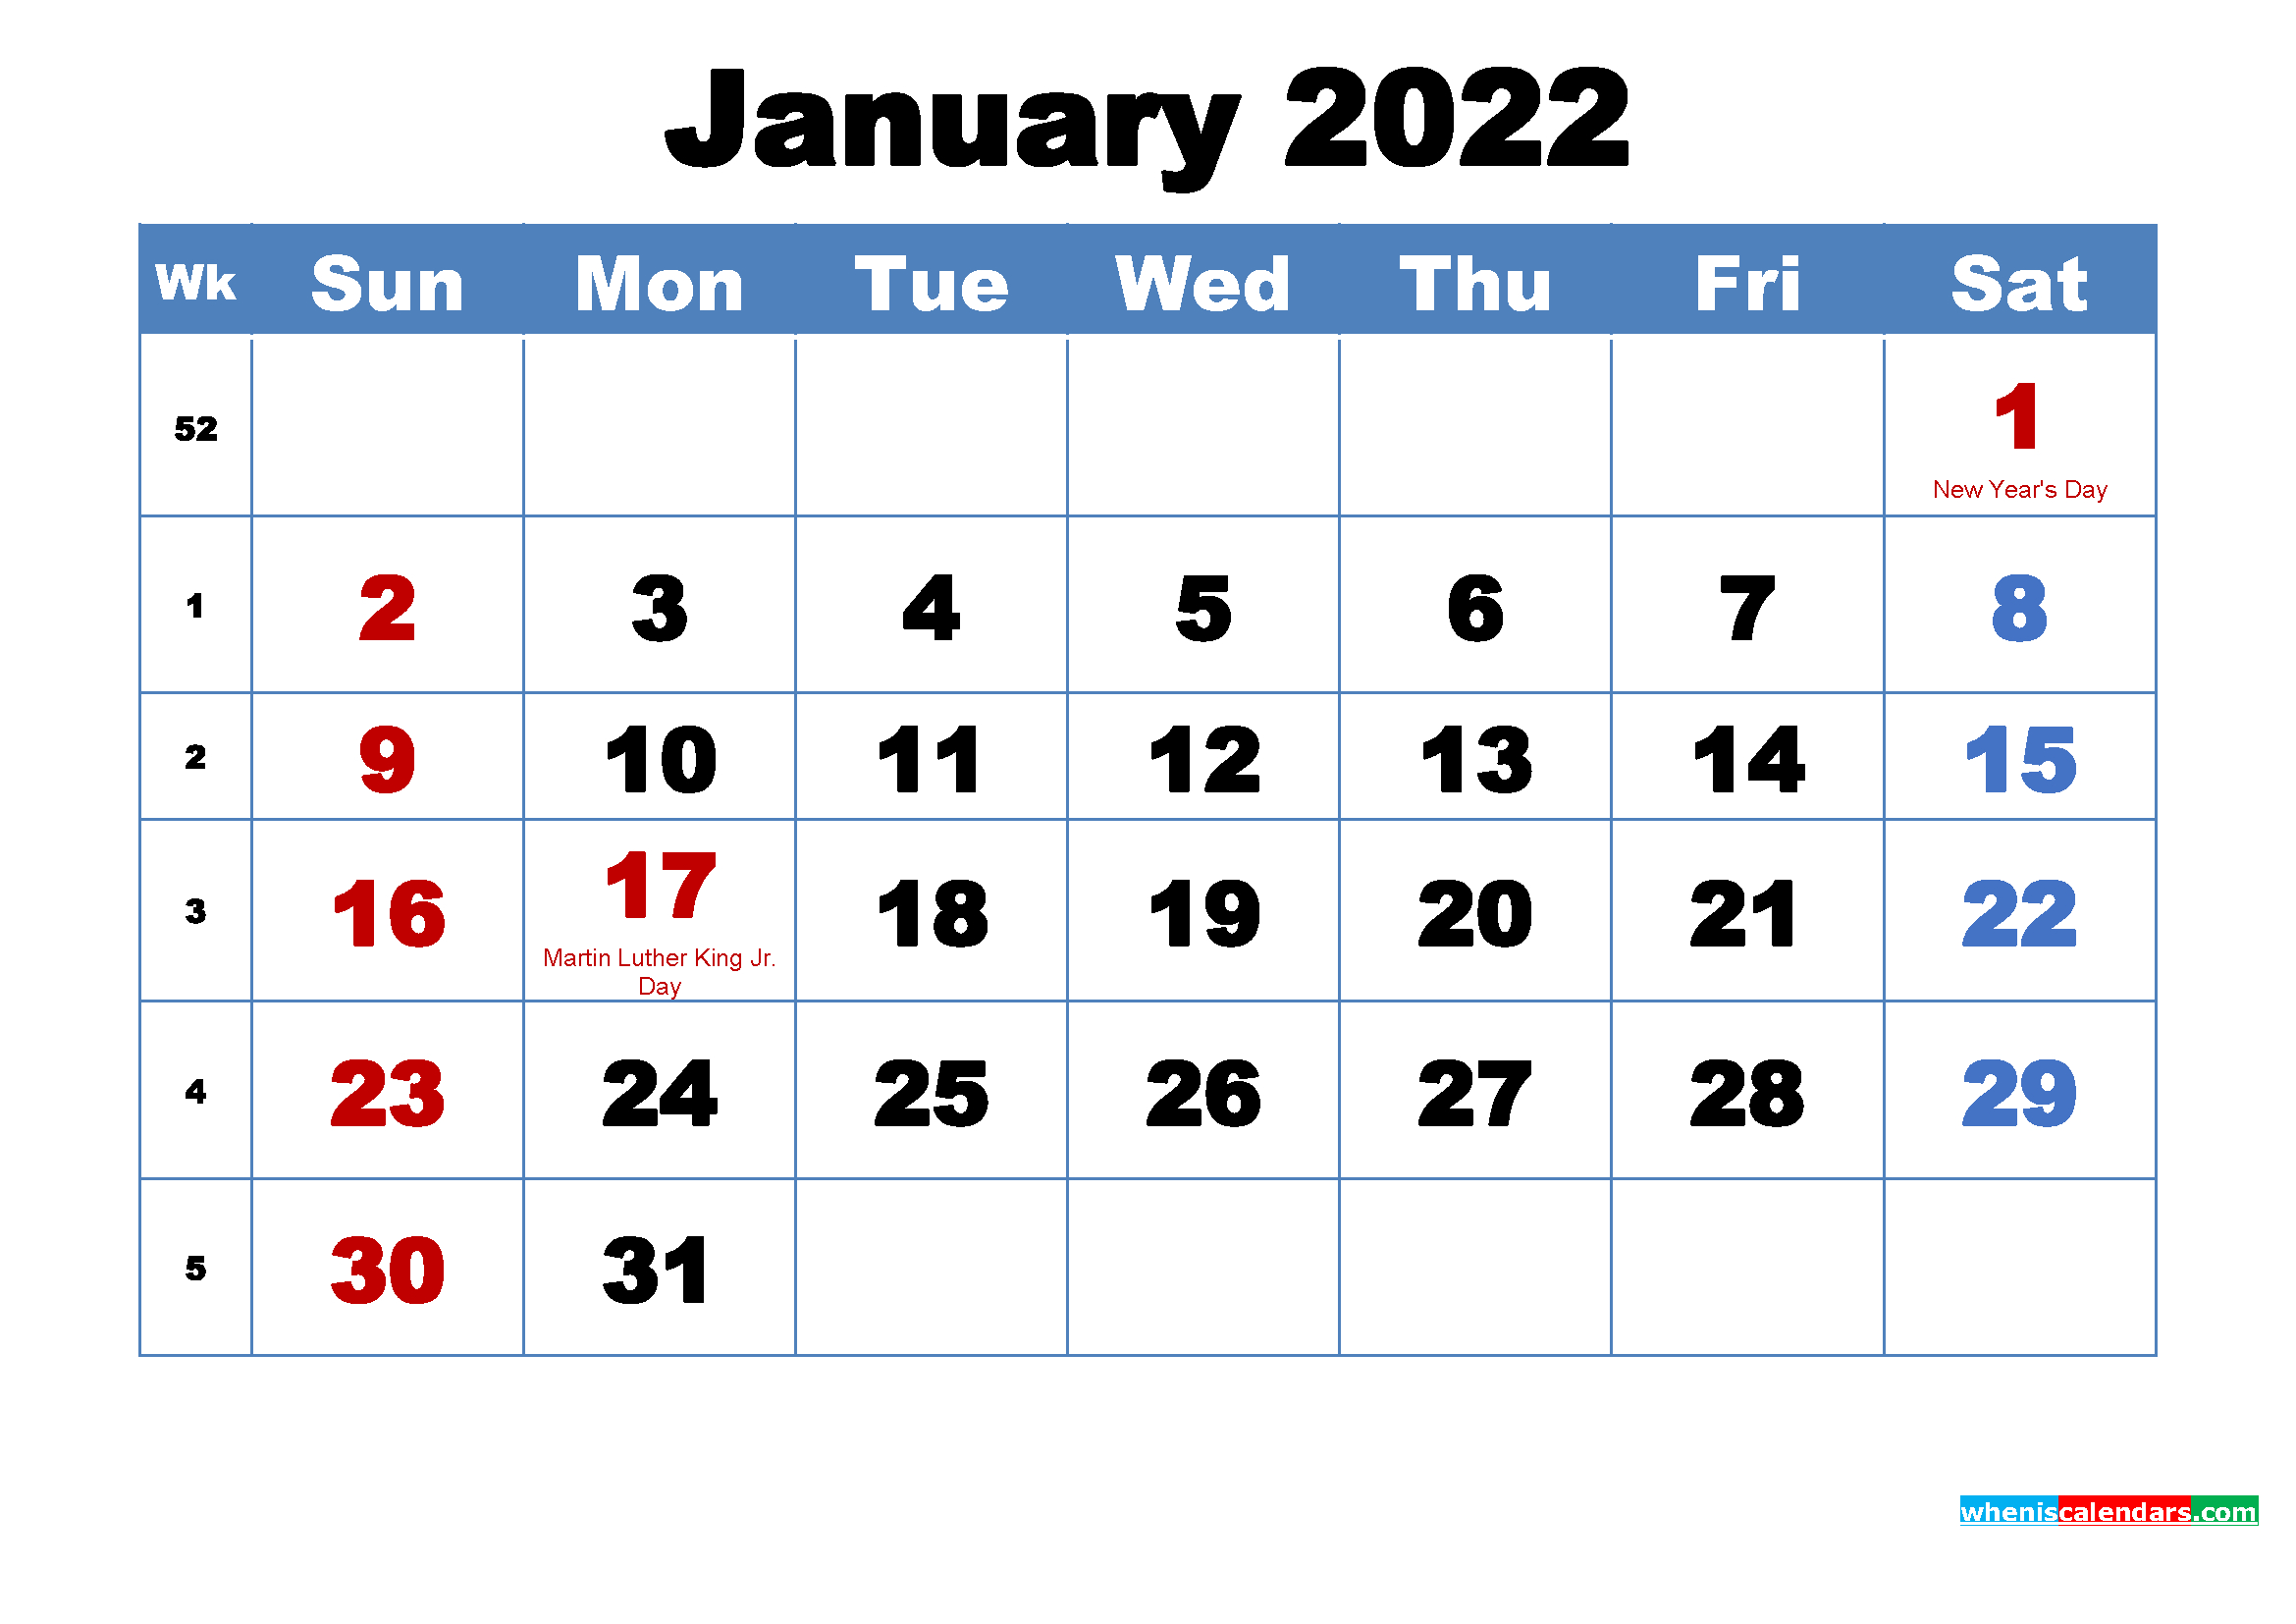 Collect January 2022 Calendar Special Days